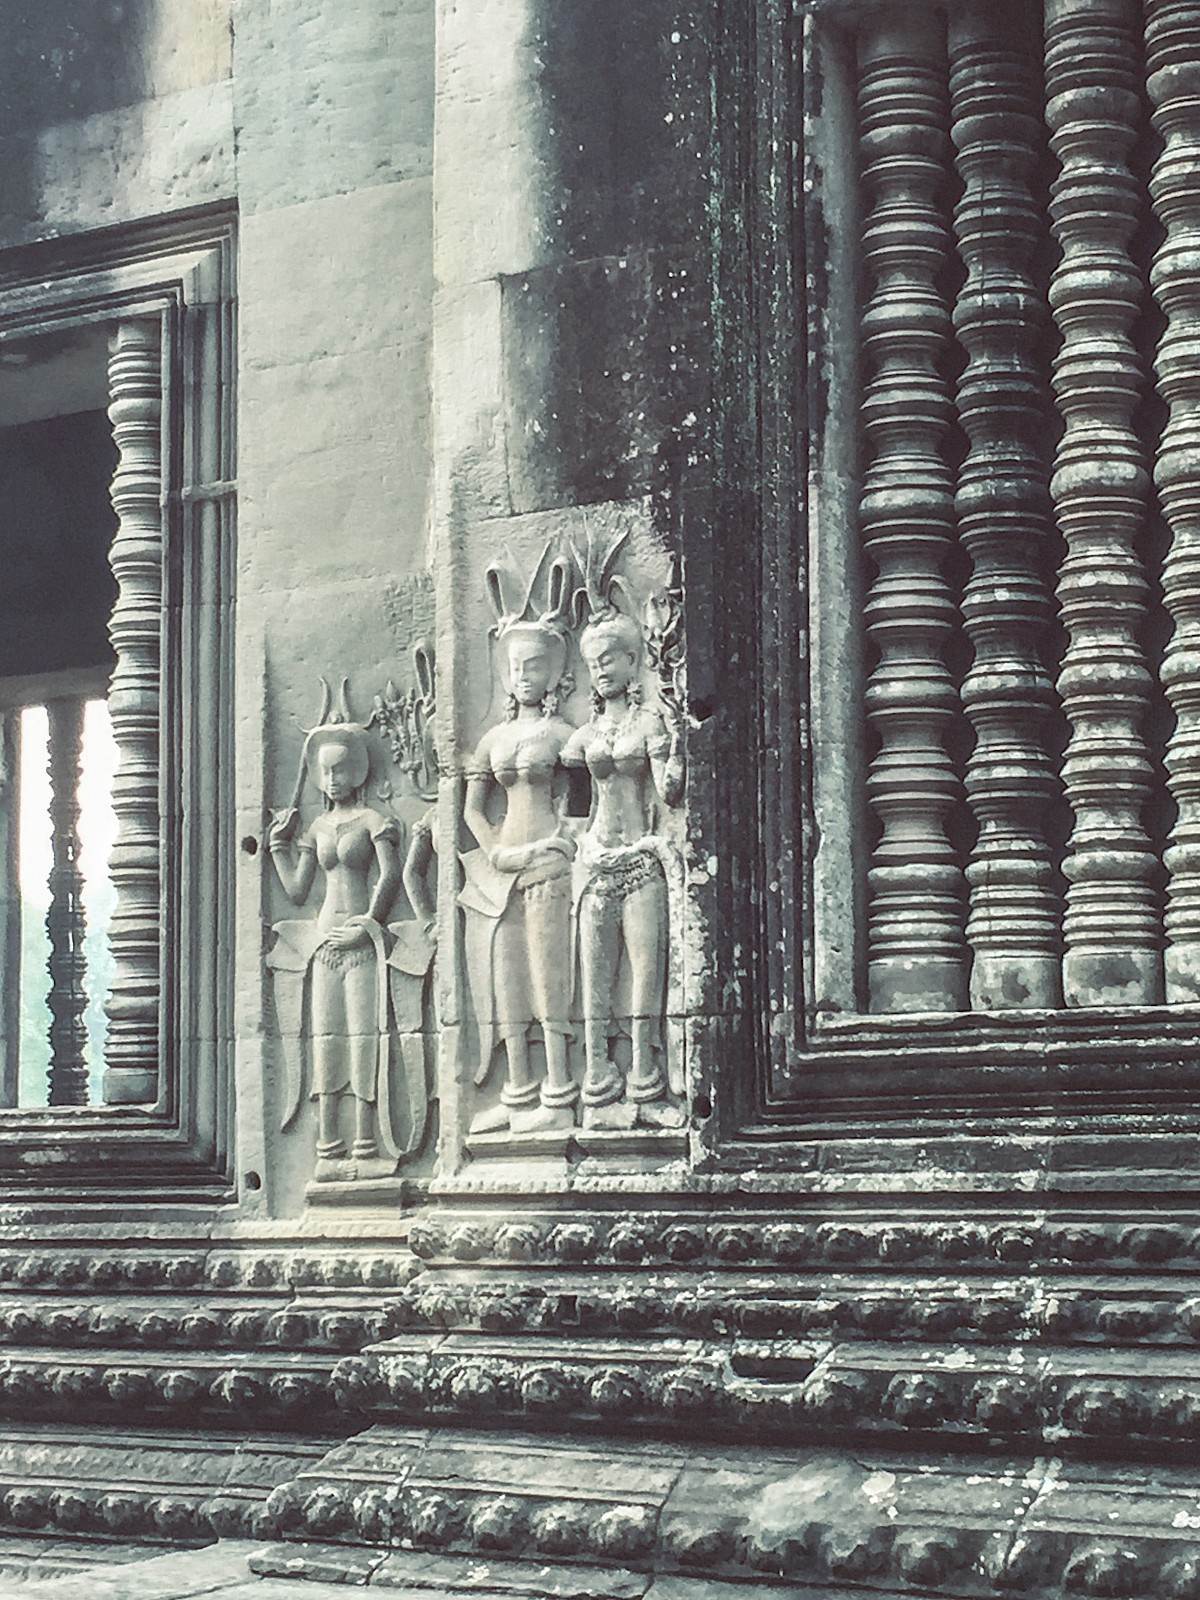 Angkor Wat, additional view